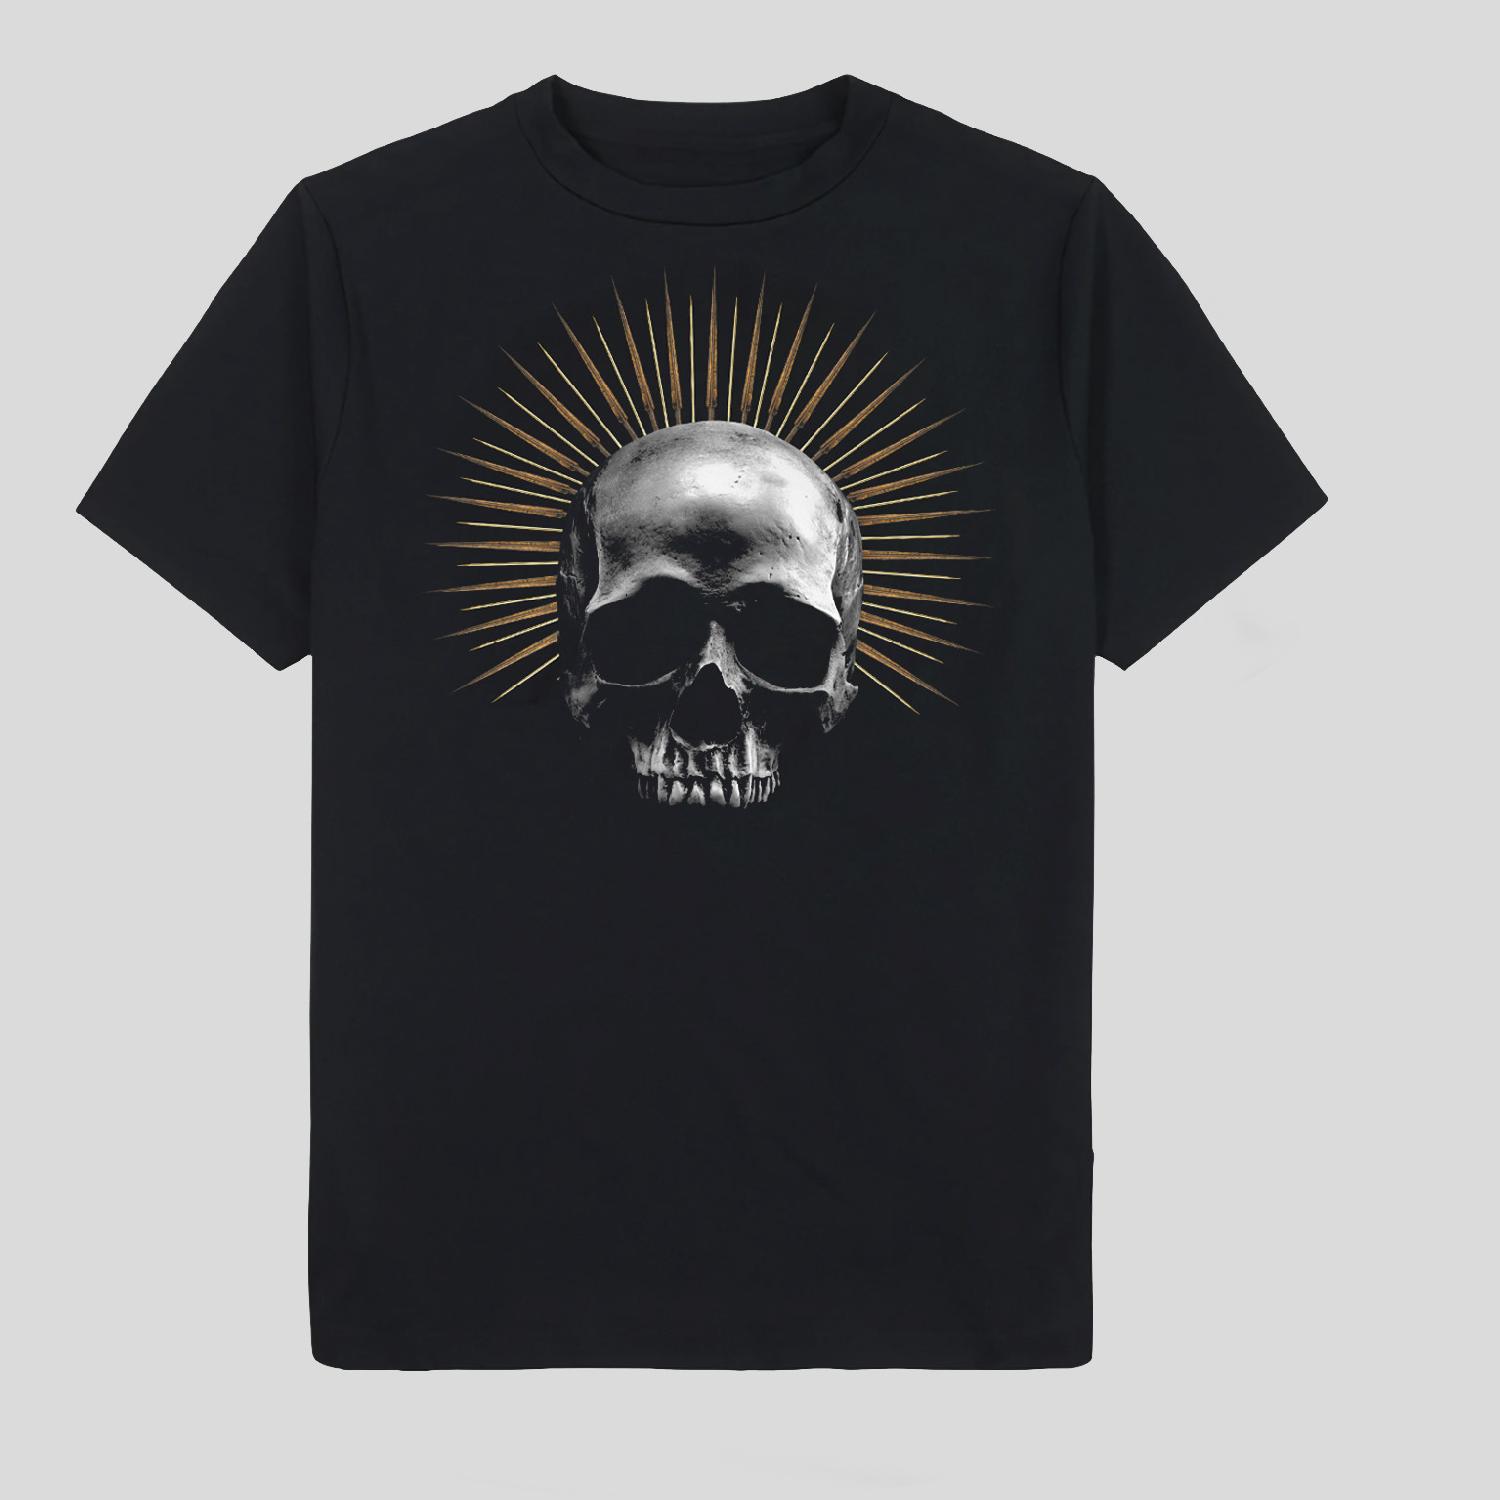 Any Given Day New Skull Shirt Black